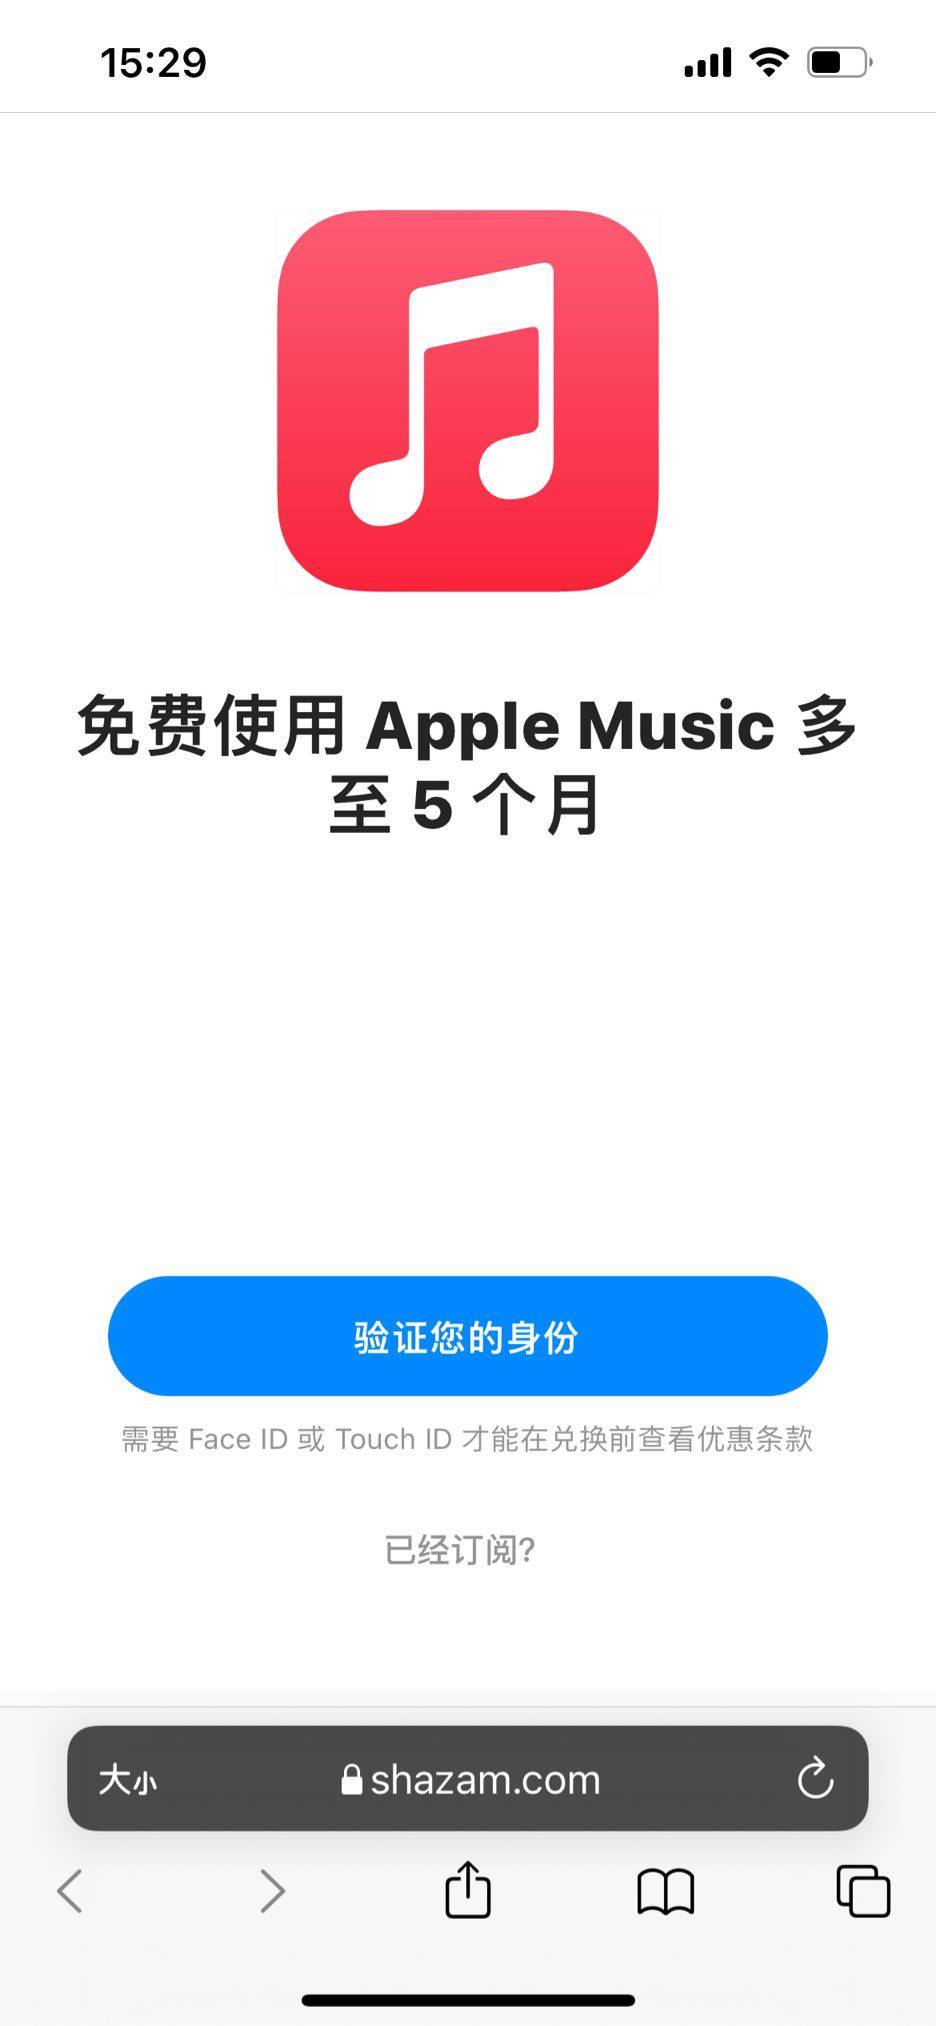 Shazam|苹果搜歌神器 Shazam 免费领最多 5 个月 Apple Music 会员